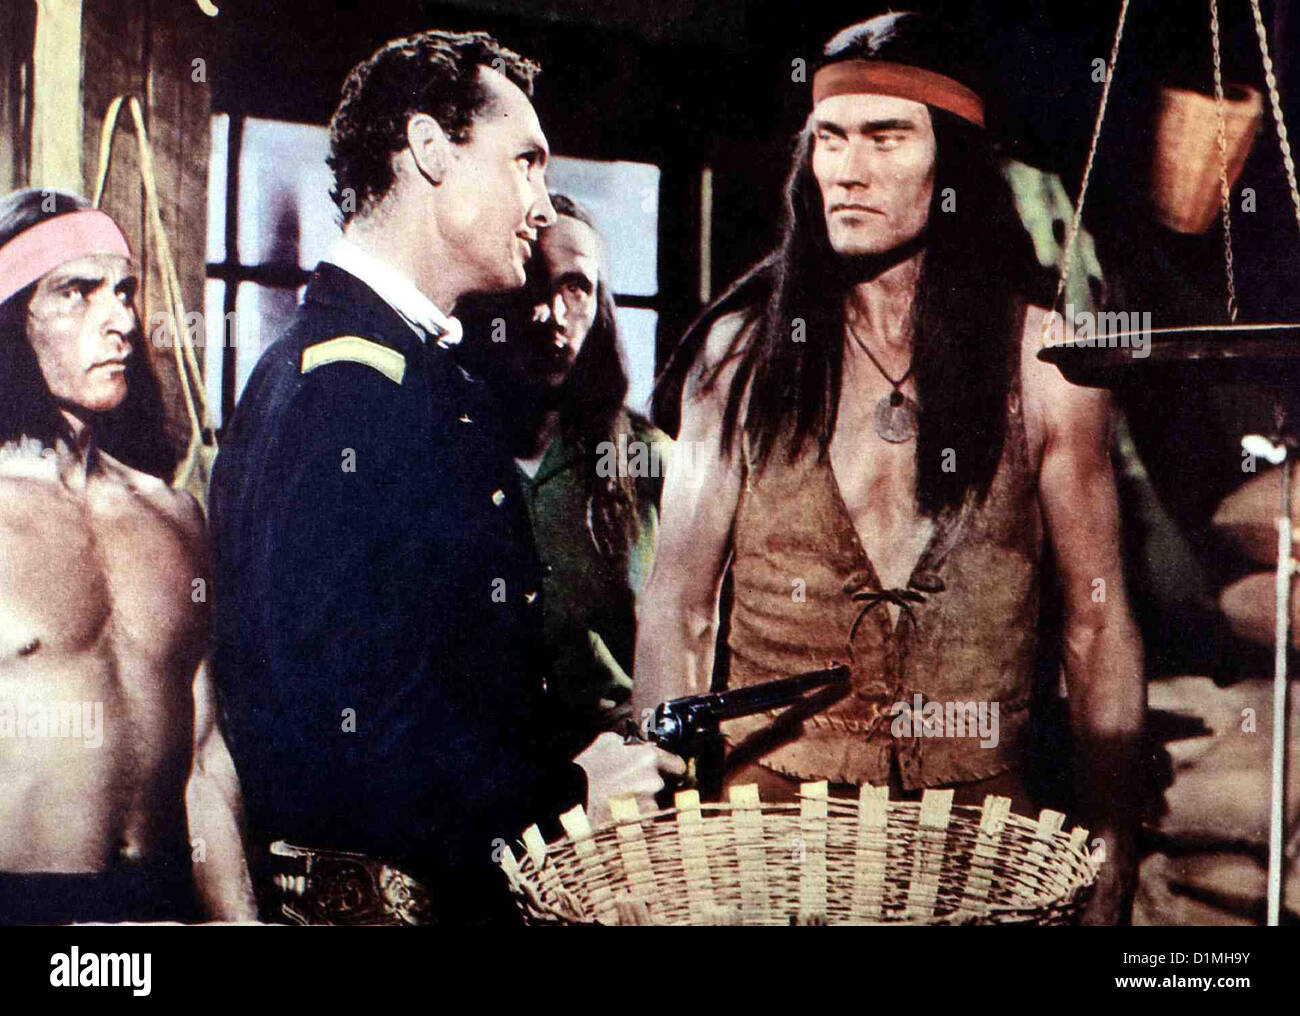 Das Letzte Kommando   Geronimo   ?, Geronimo (Chuck Connors,r) *** Local Caption *** 1961  -- Stock Photo